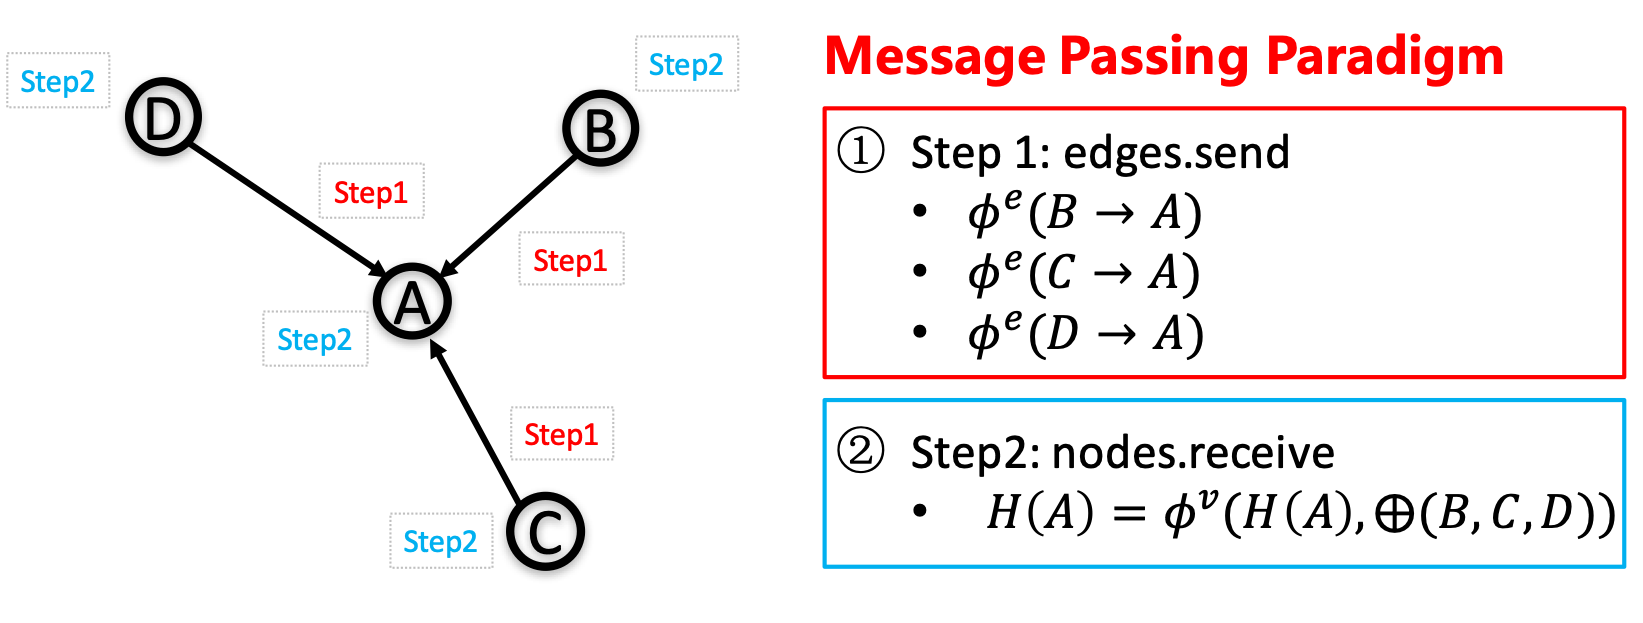 The basic idea of message passing paradigm